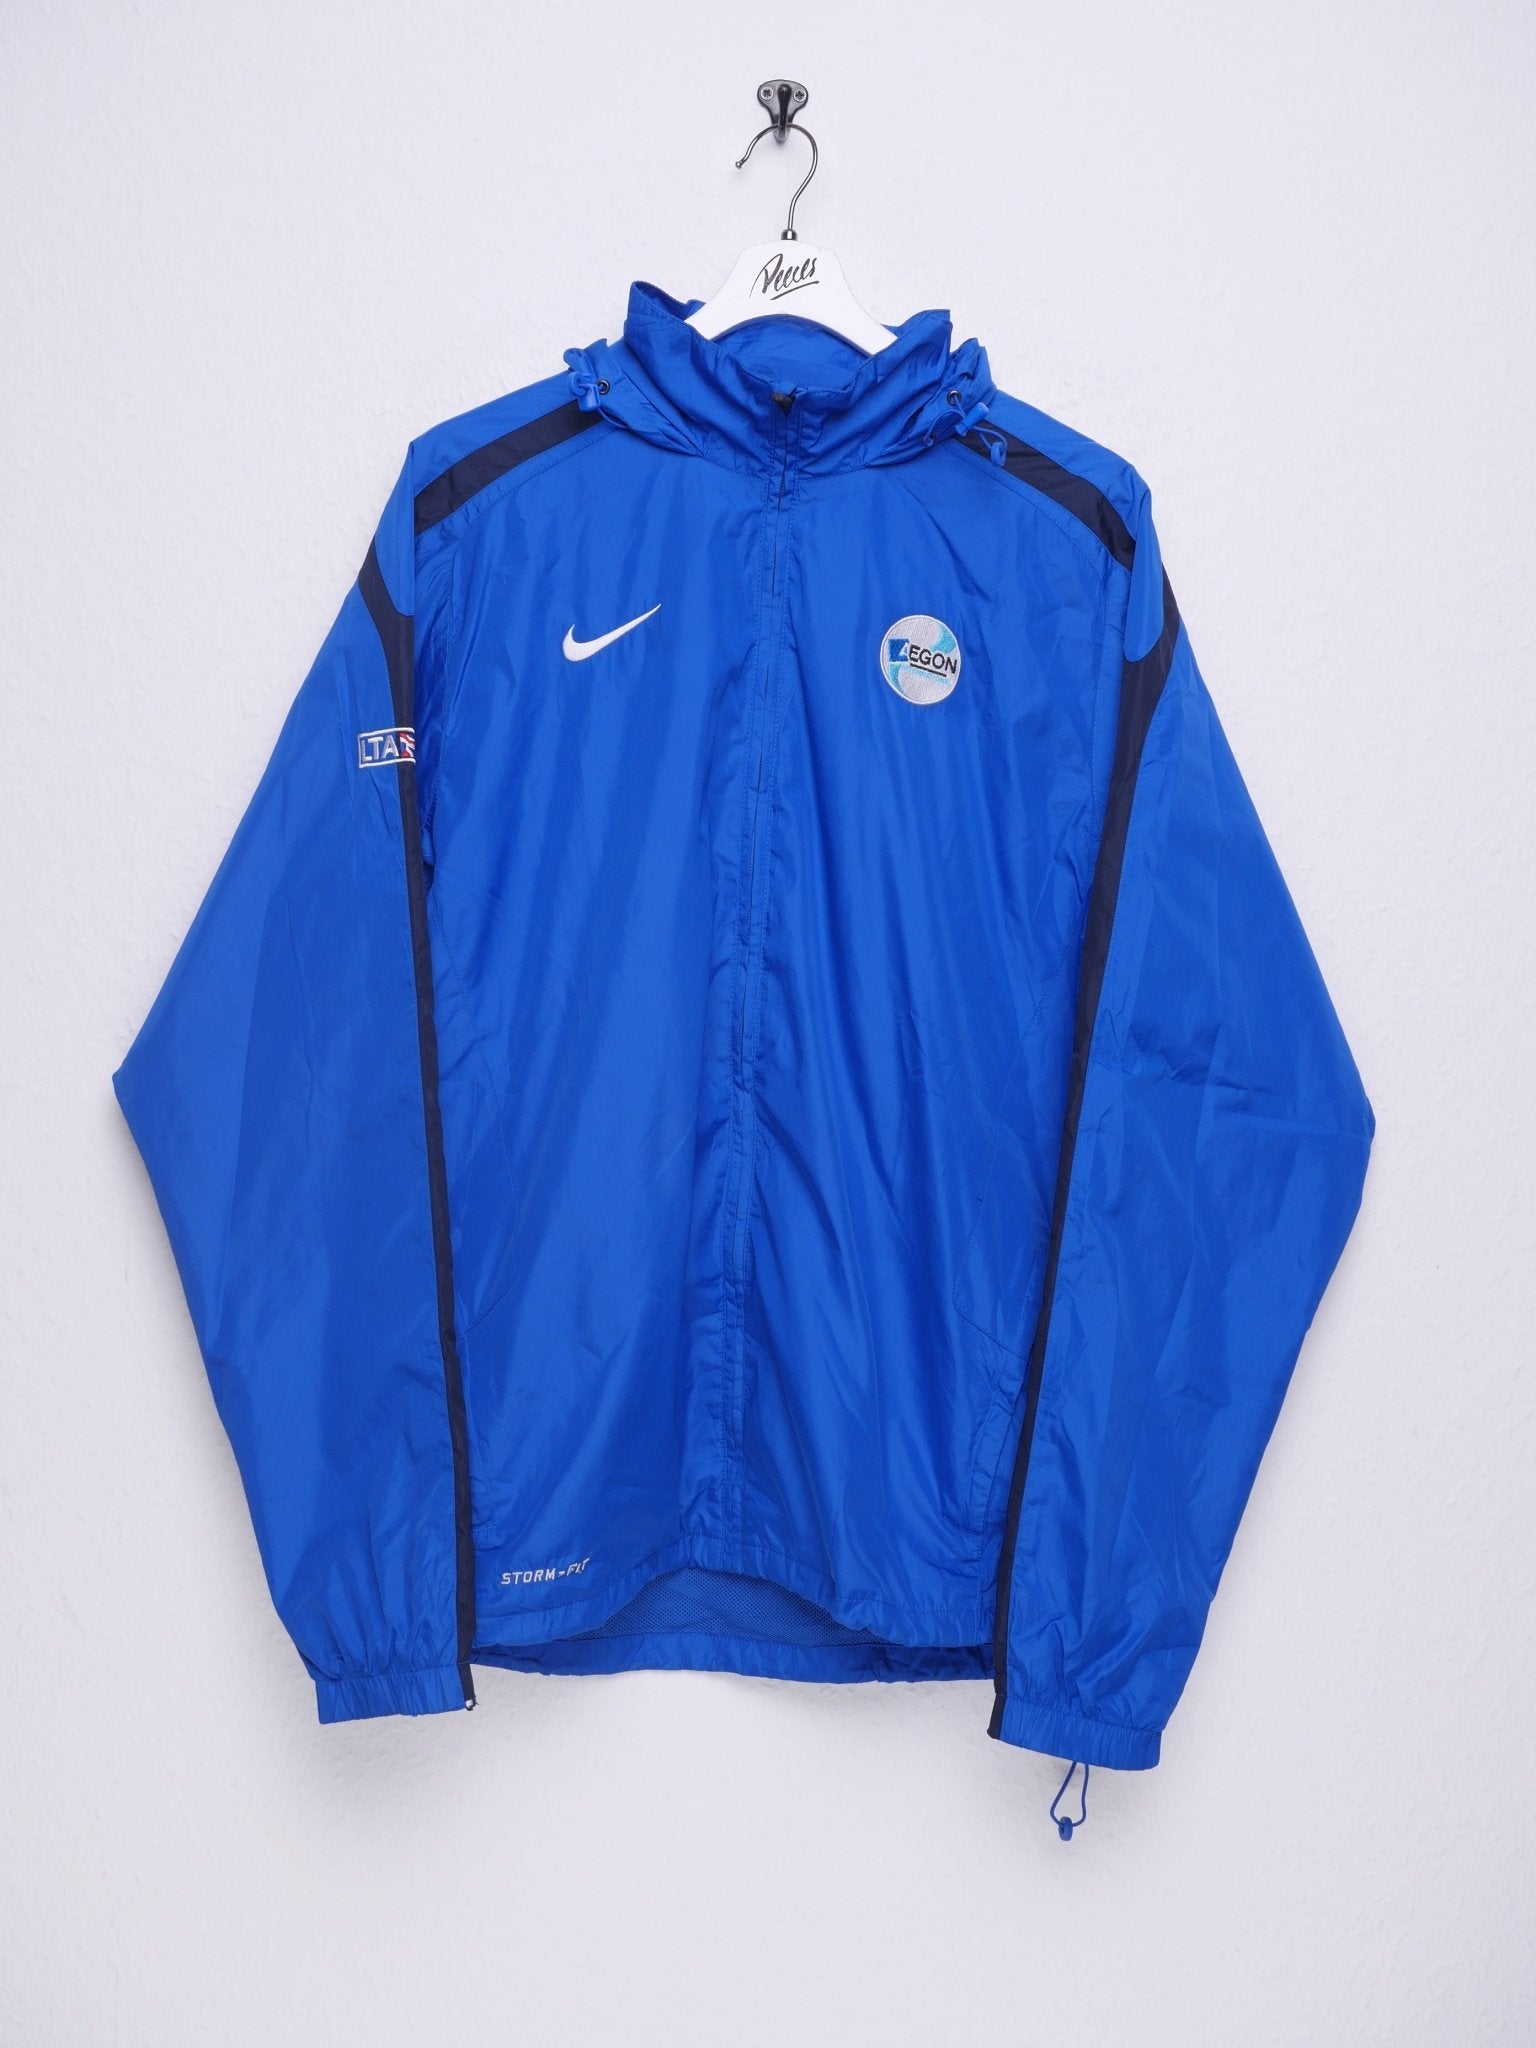 Nike Egon International embroidered Swoosh blue Track Jacke - Peeces